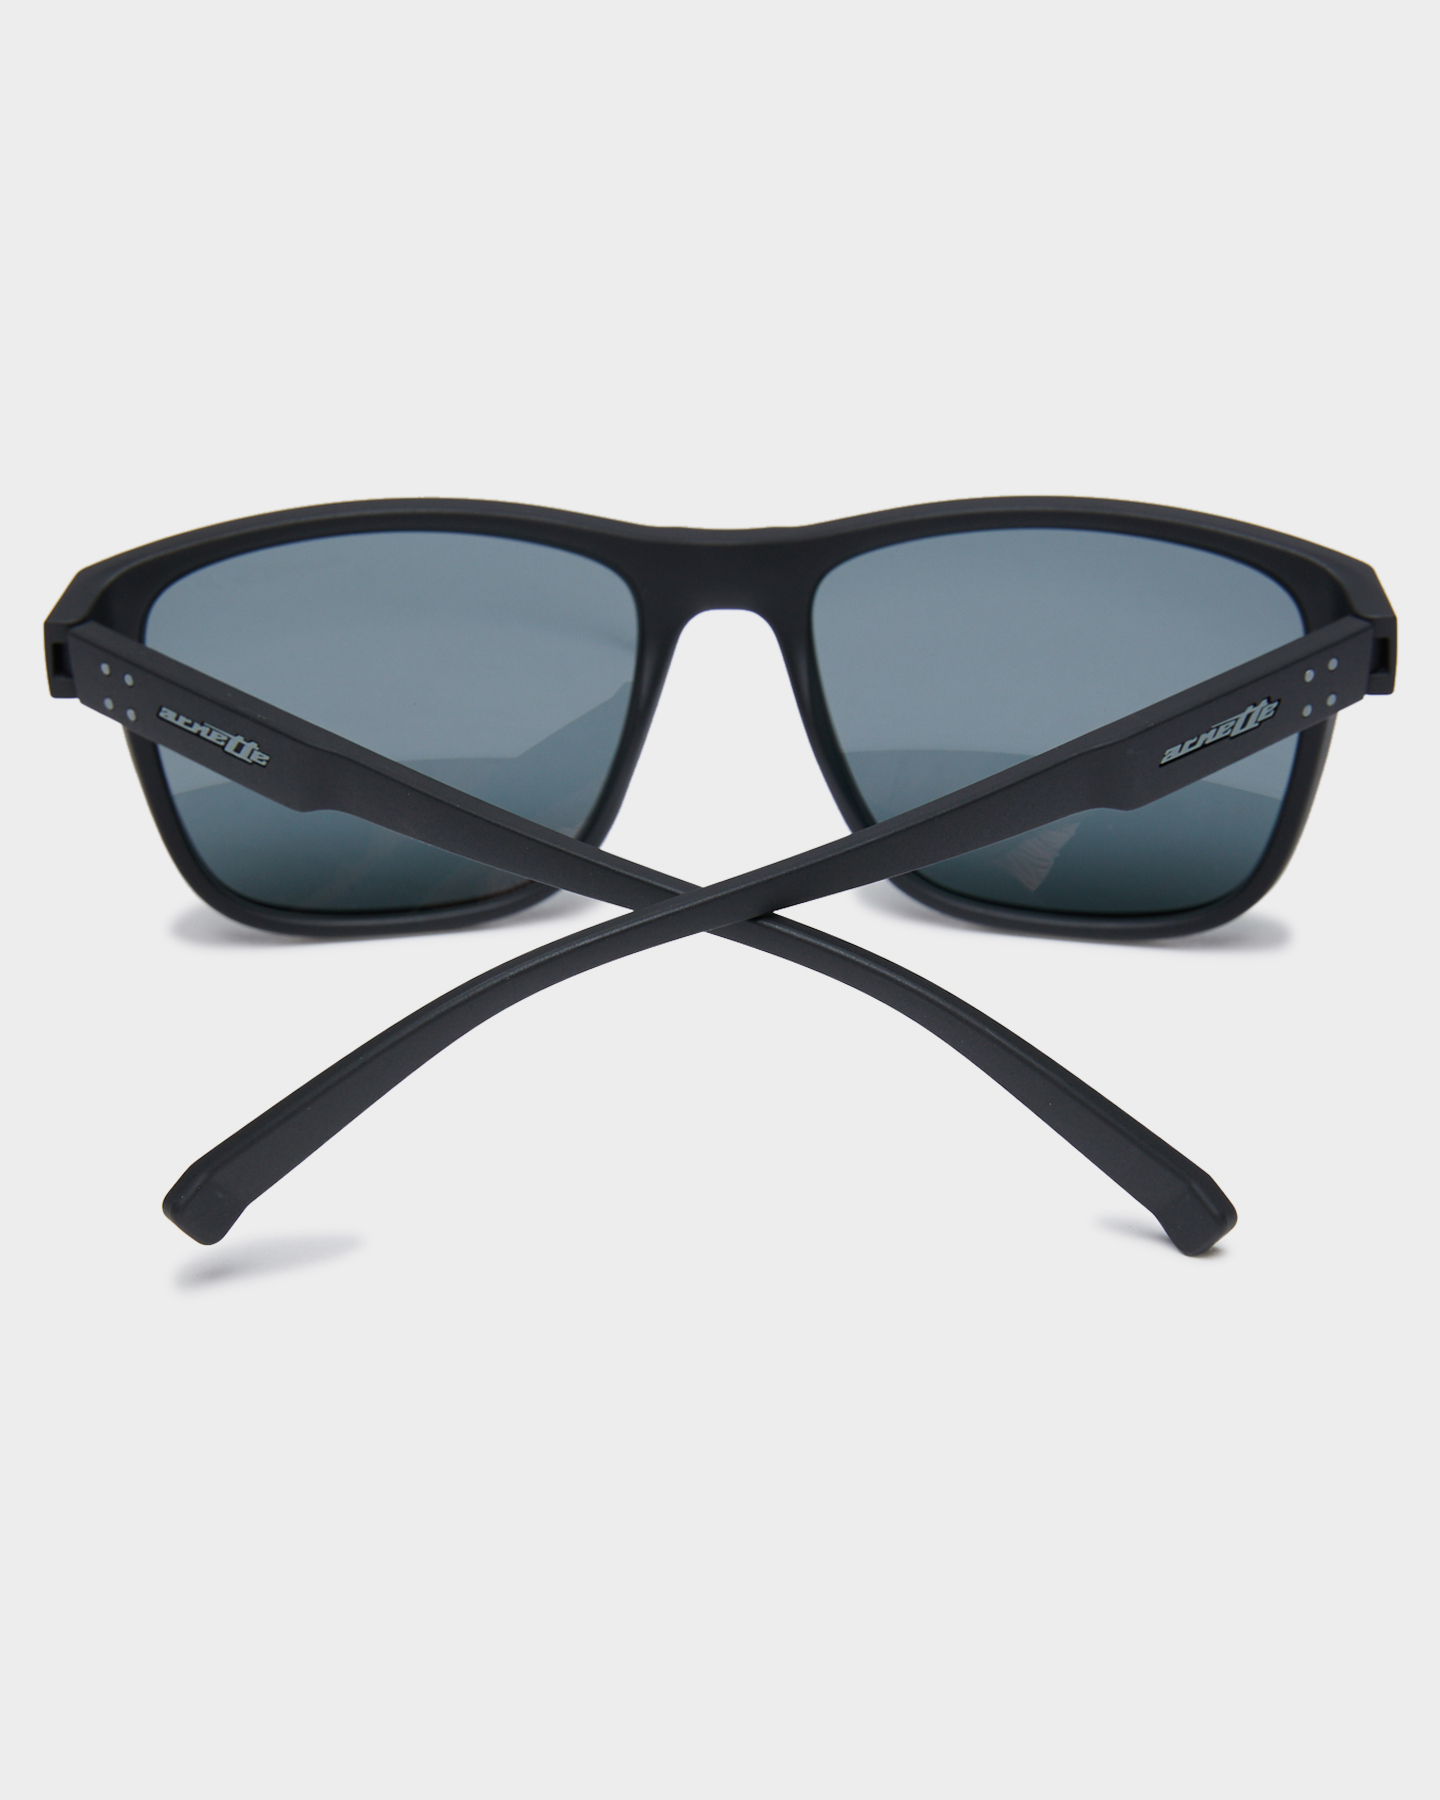 Arnette Shoreditch Polarized Sunglasses - Grey Polar Mirror | SurfStitch